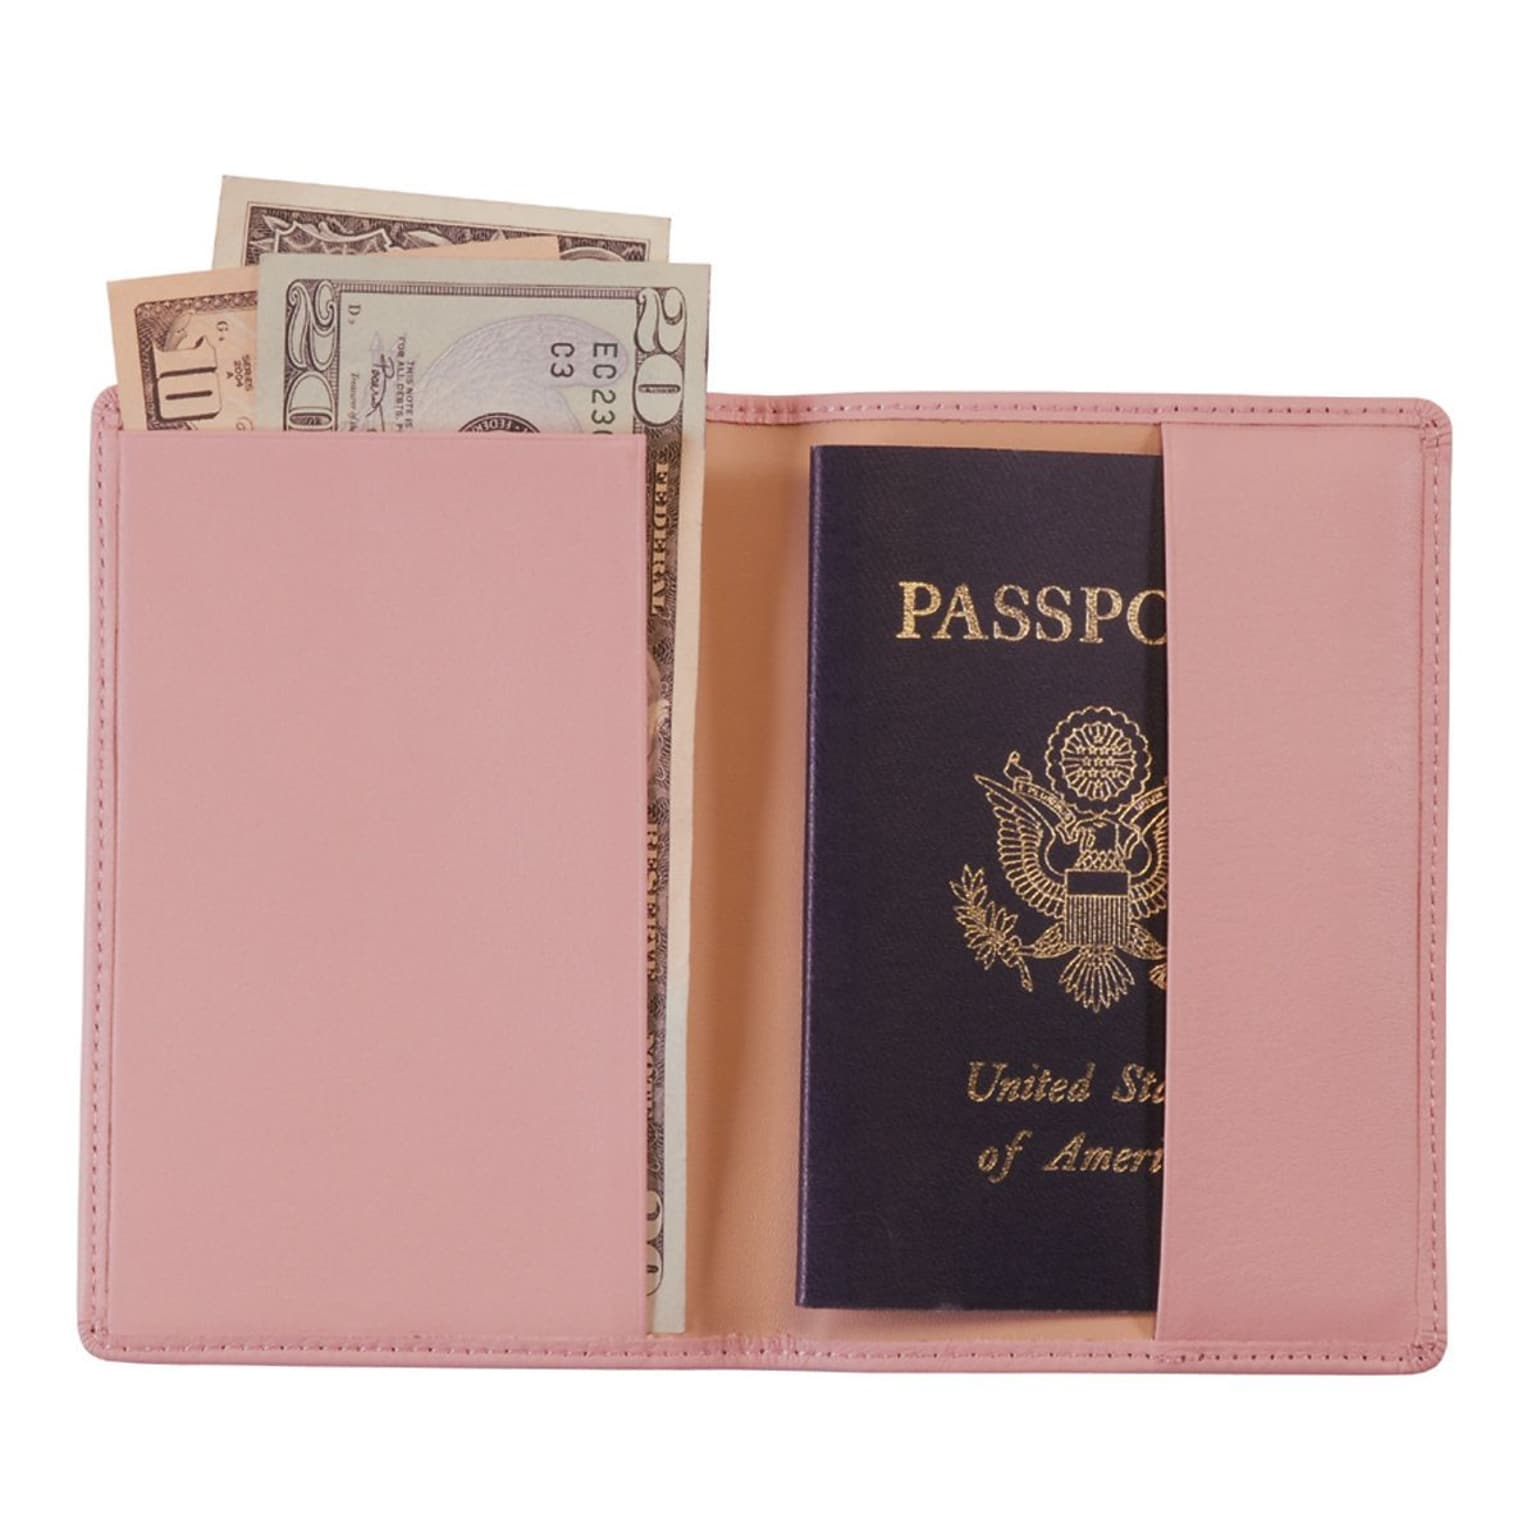 Royce Leather Passport Holder, Carnation Pink